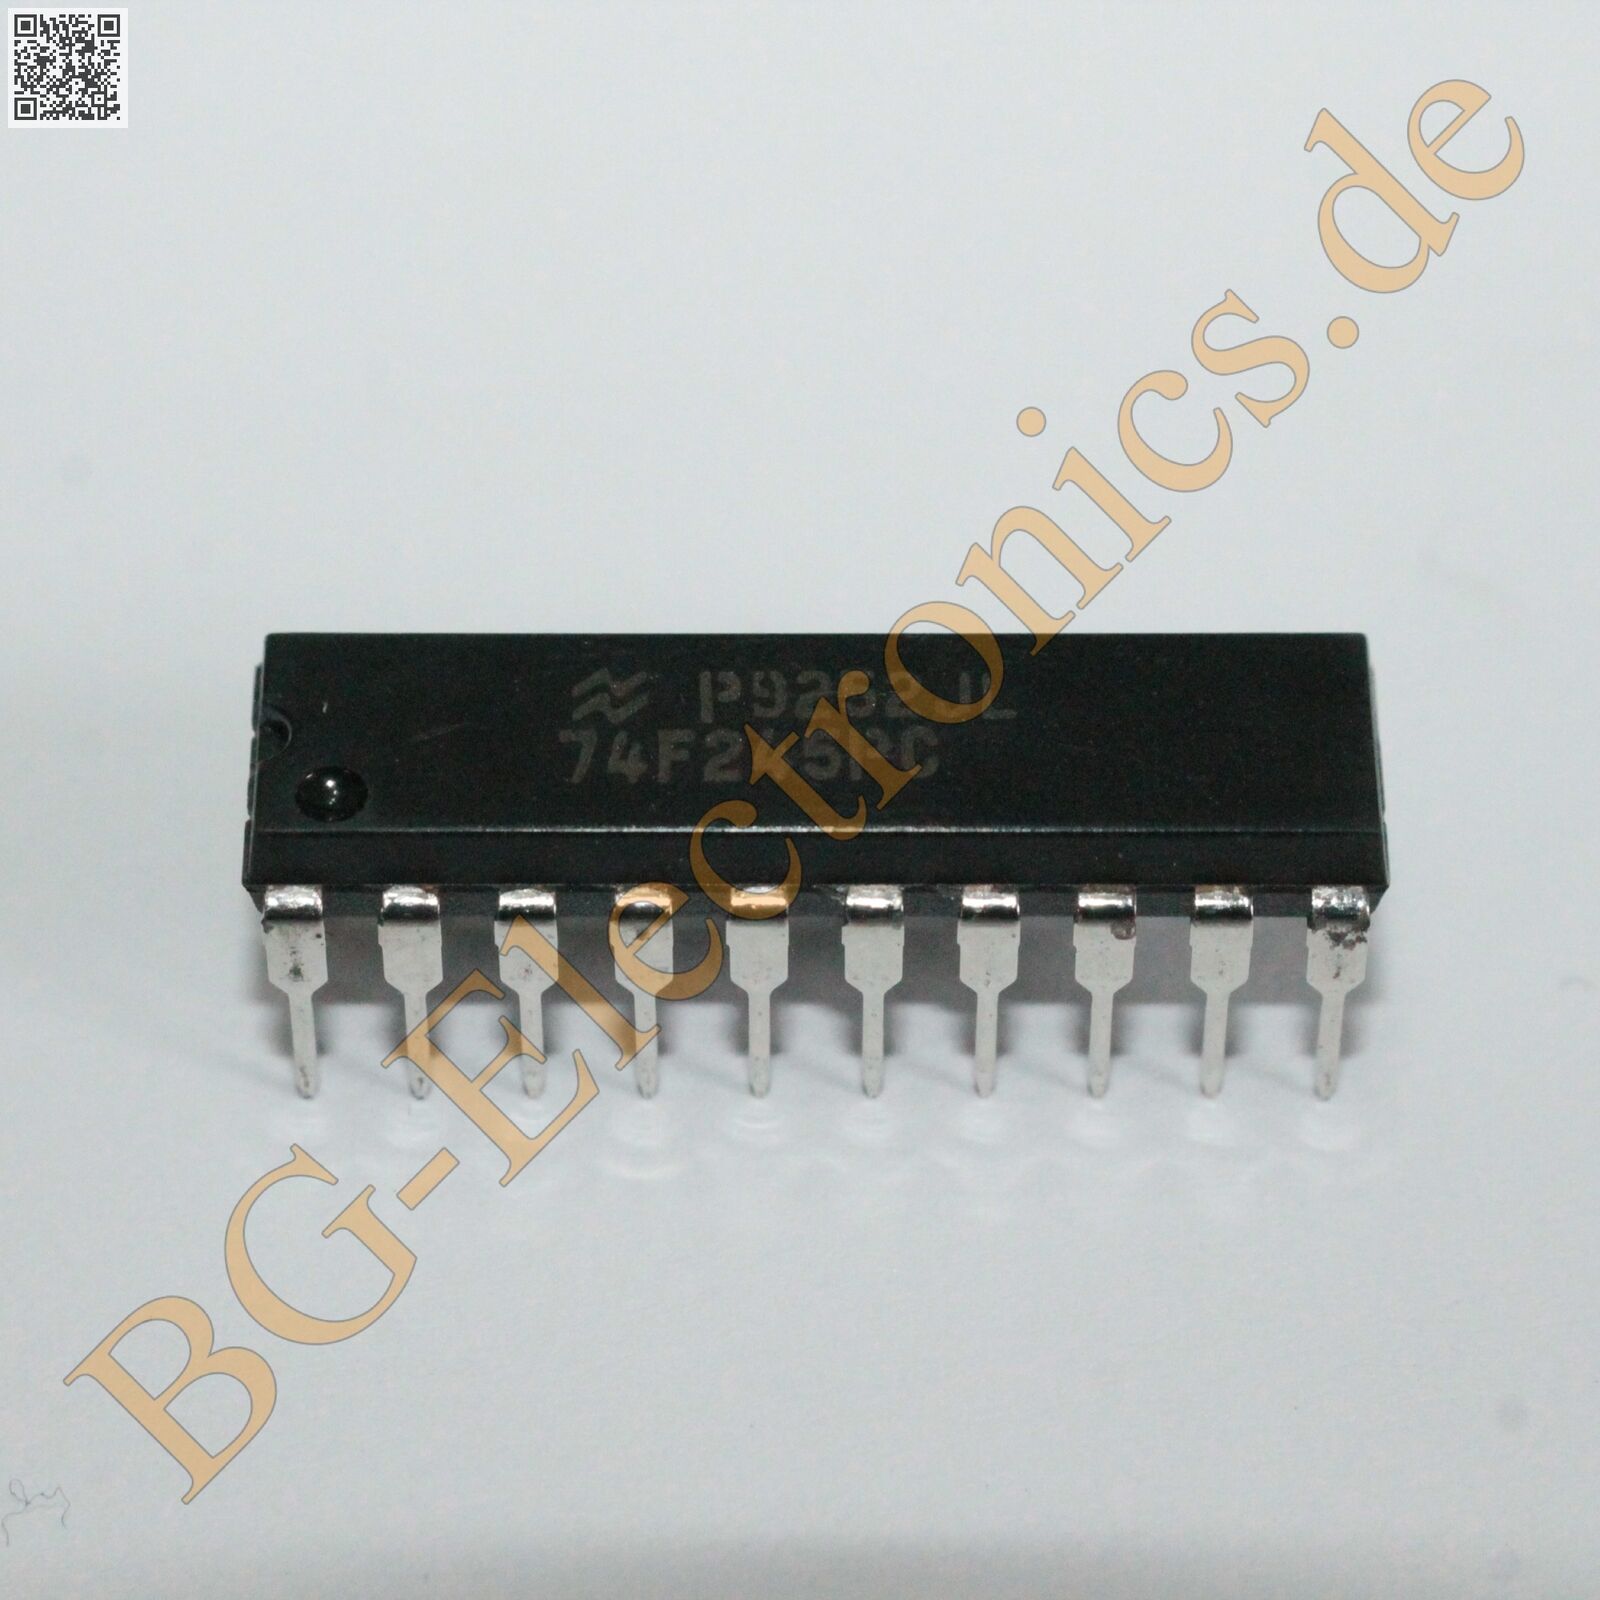 2 x 74F245PC LED Driver 8-Bit-Bus Transceiver Amiga NS DIP-20 2pcs